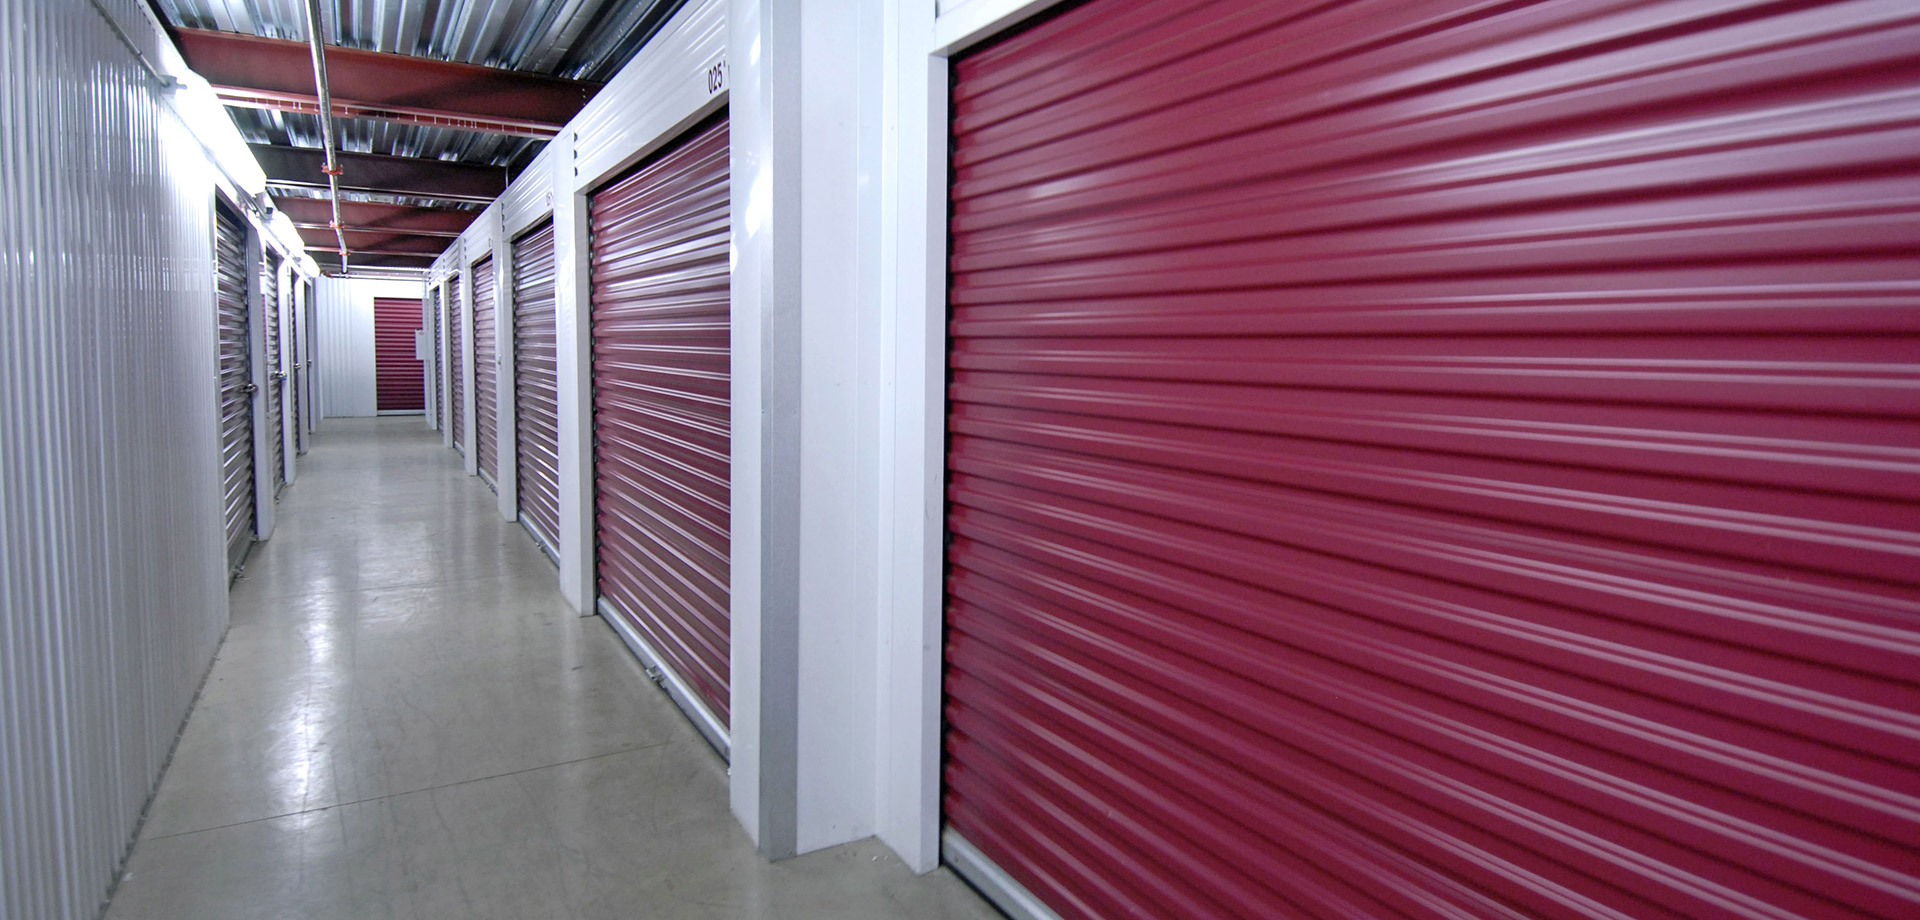 Image of storage locker hallway